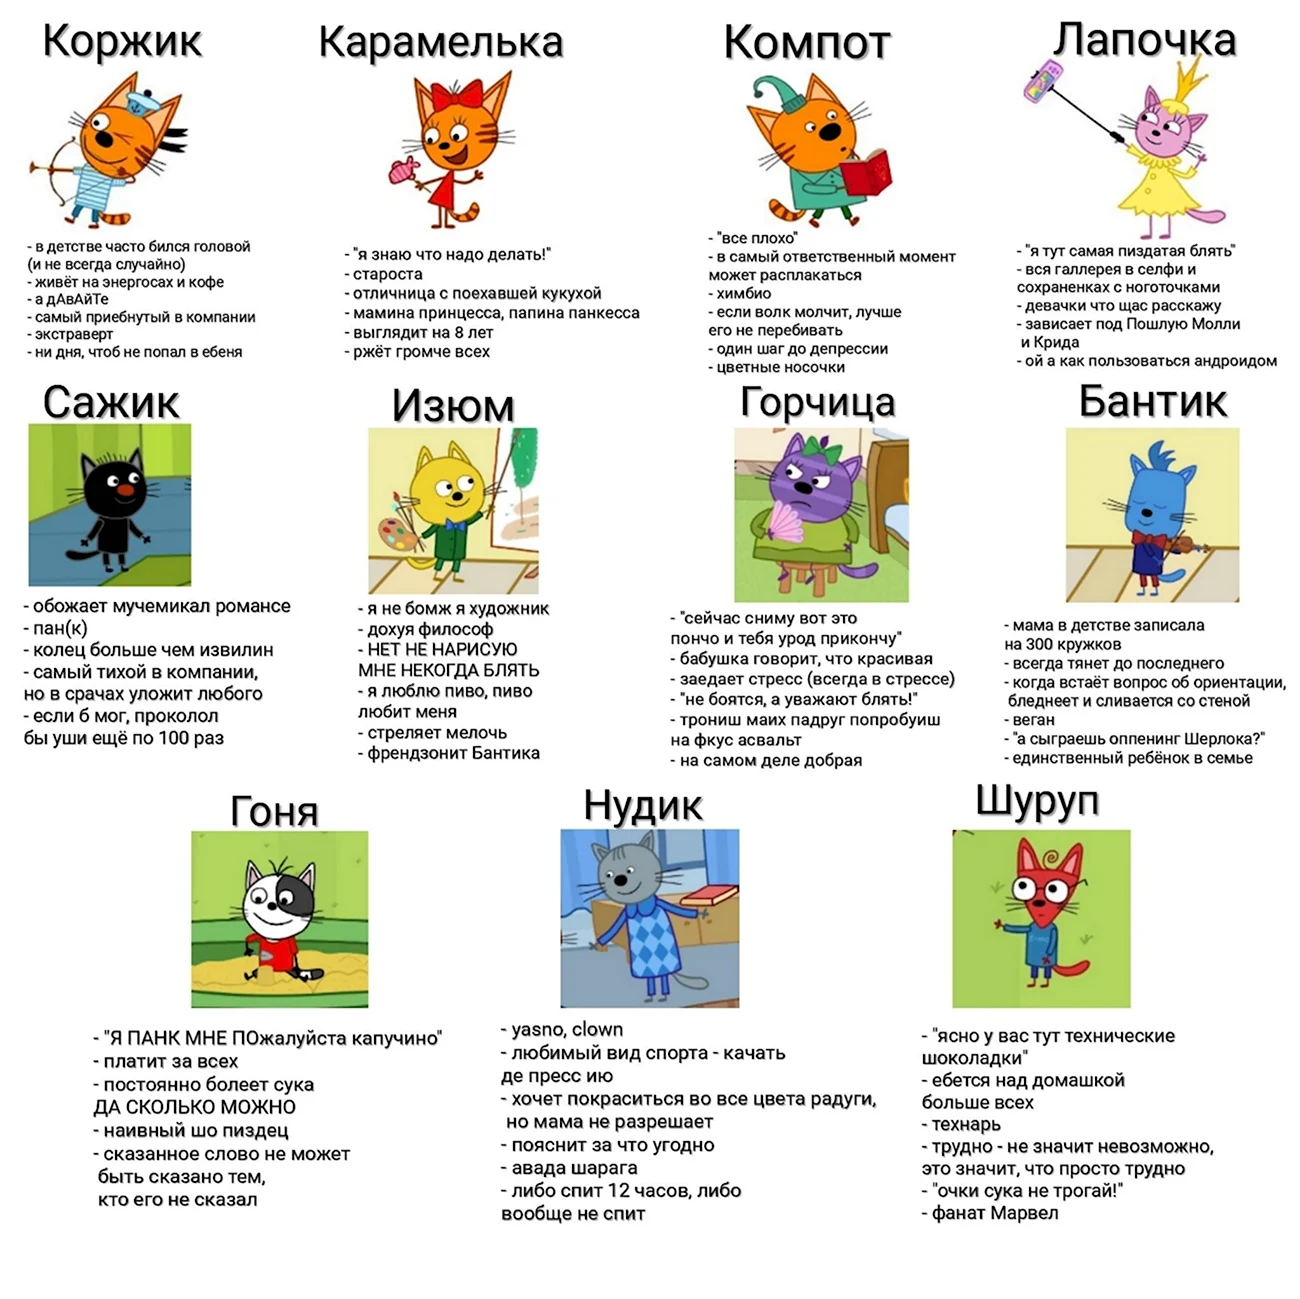 Герои мультика три кота имена. Картинка из мультфильма